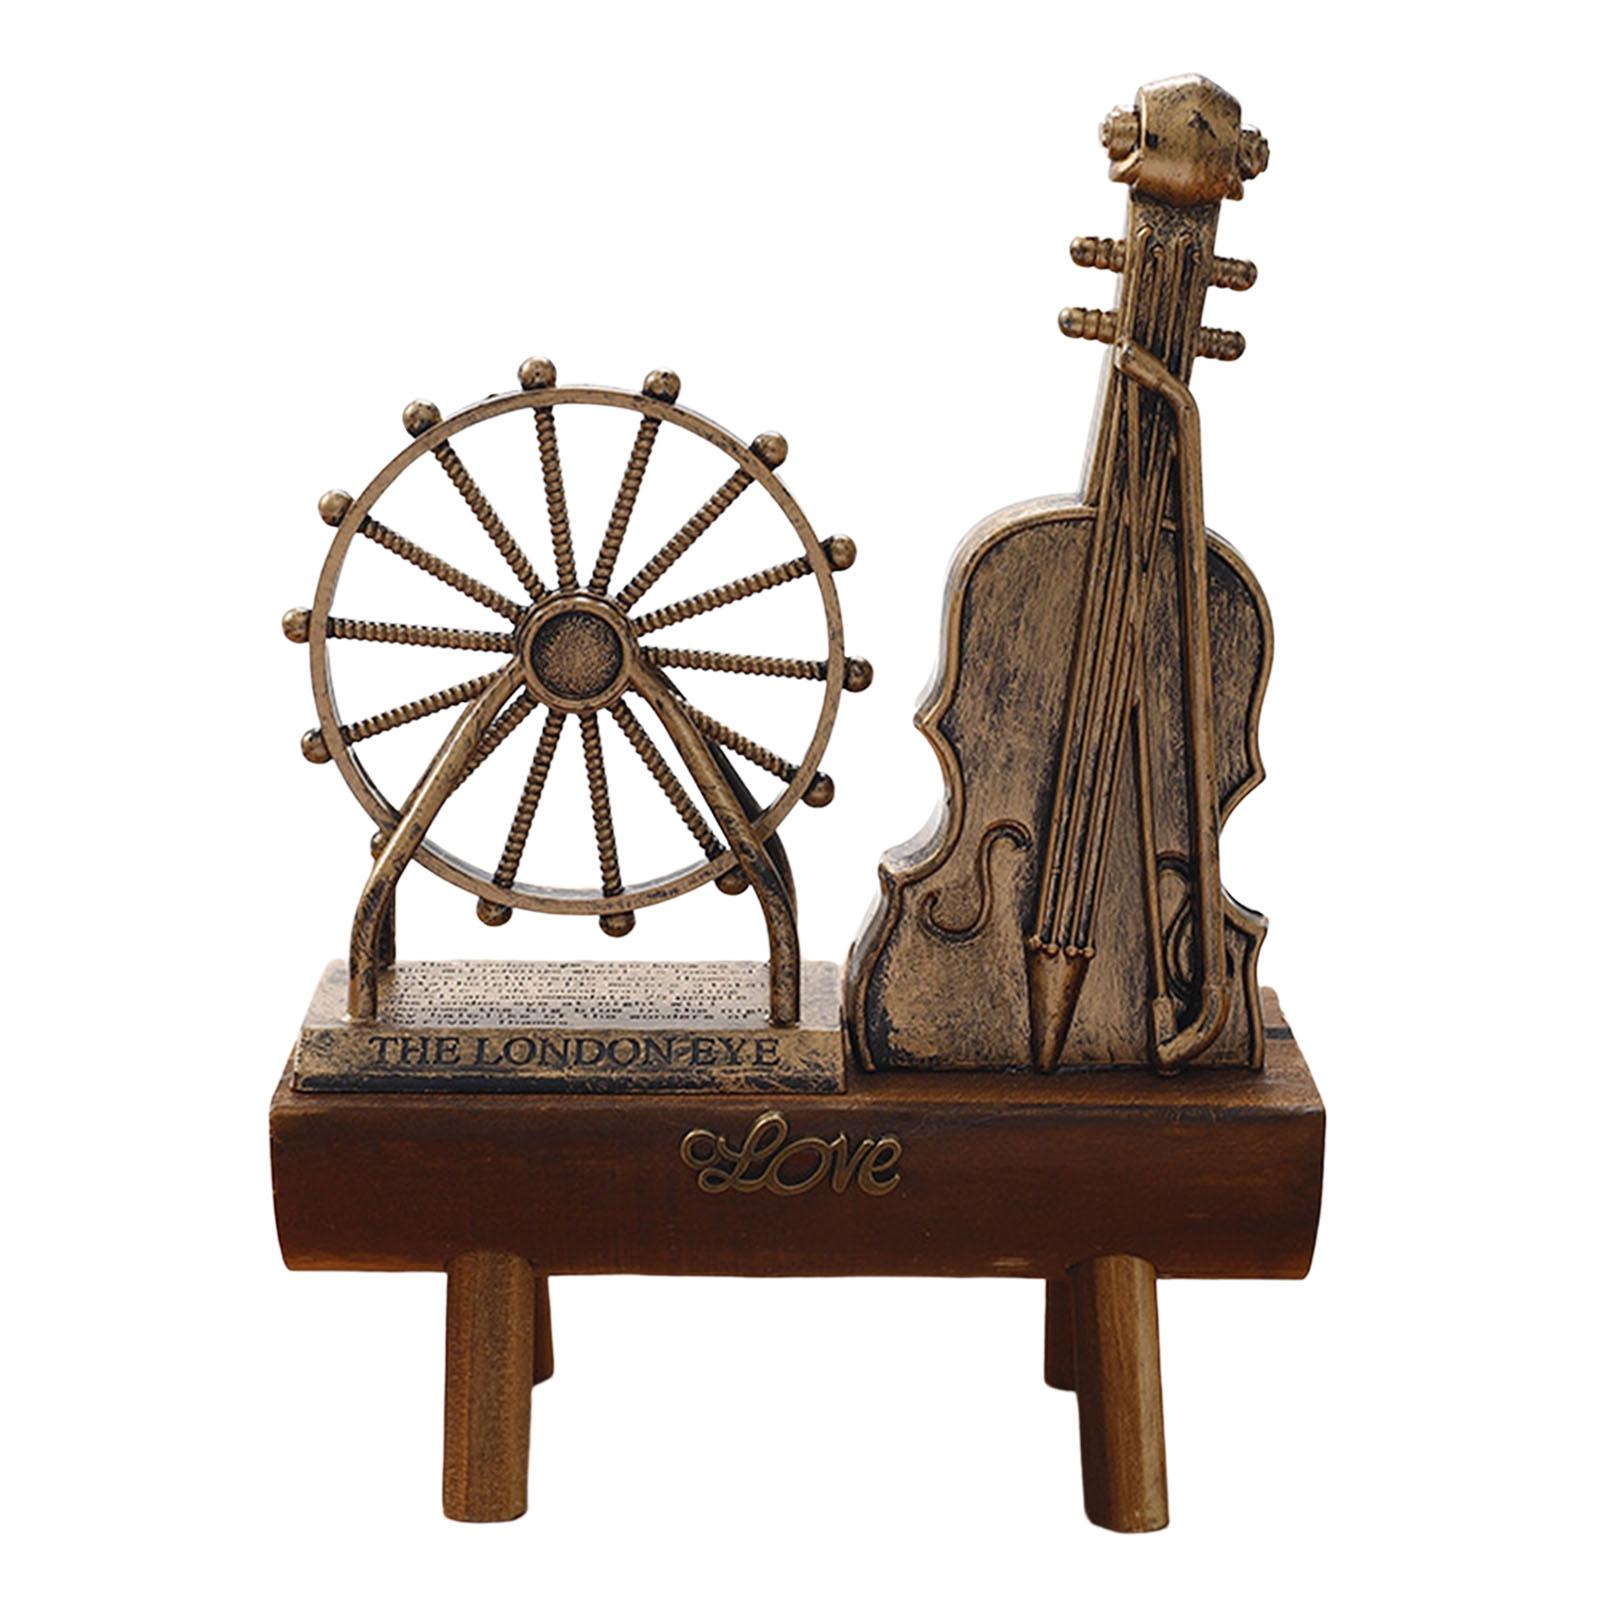 Miniature Wooden Model Crafts Ornament Kids Gift for Desktop Home Decor Ferris Wheel